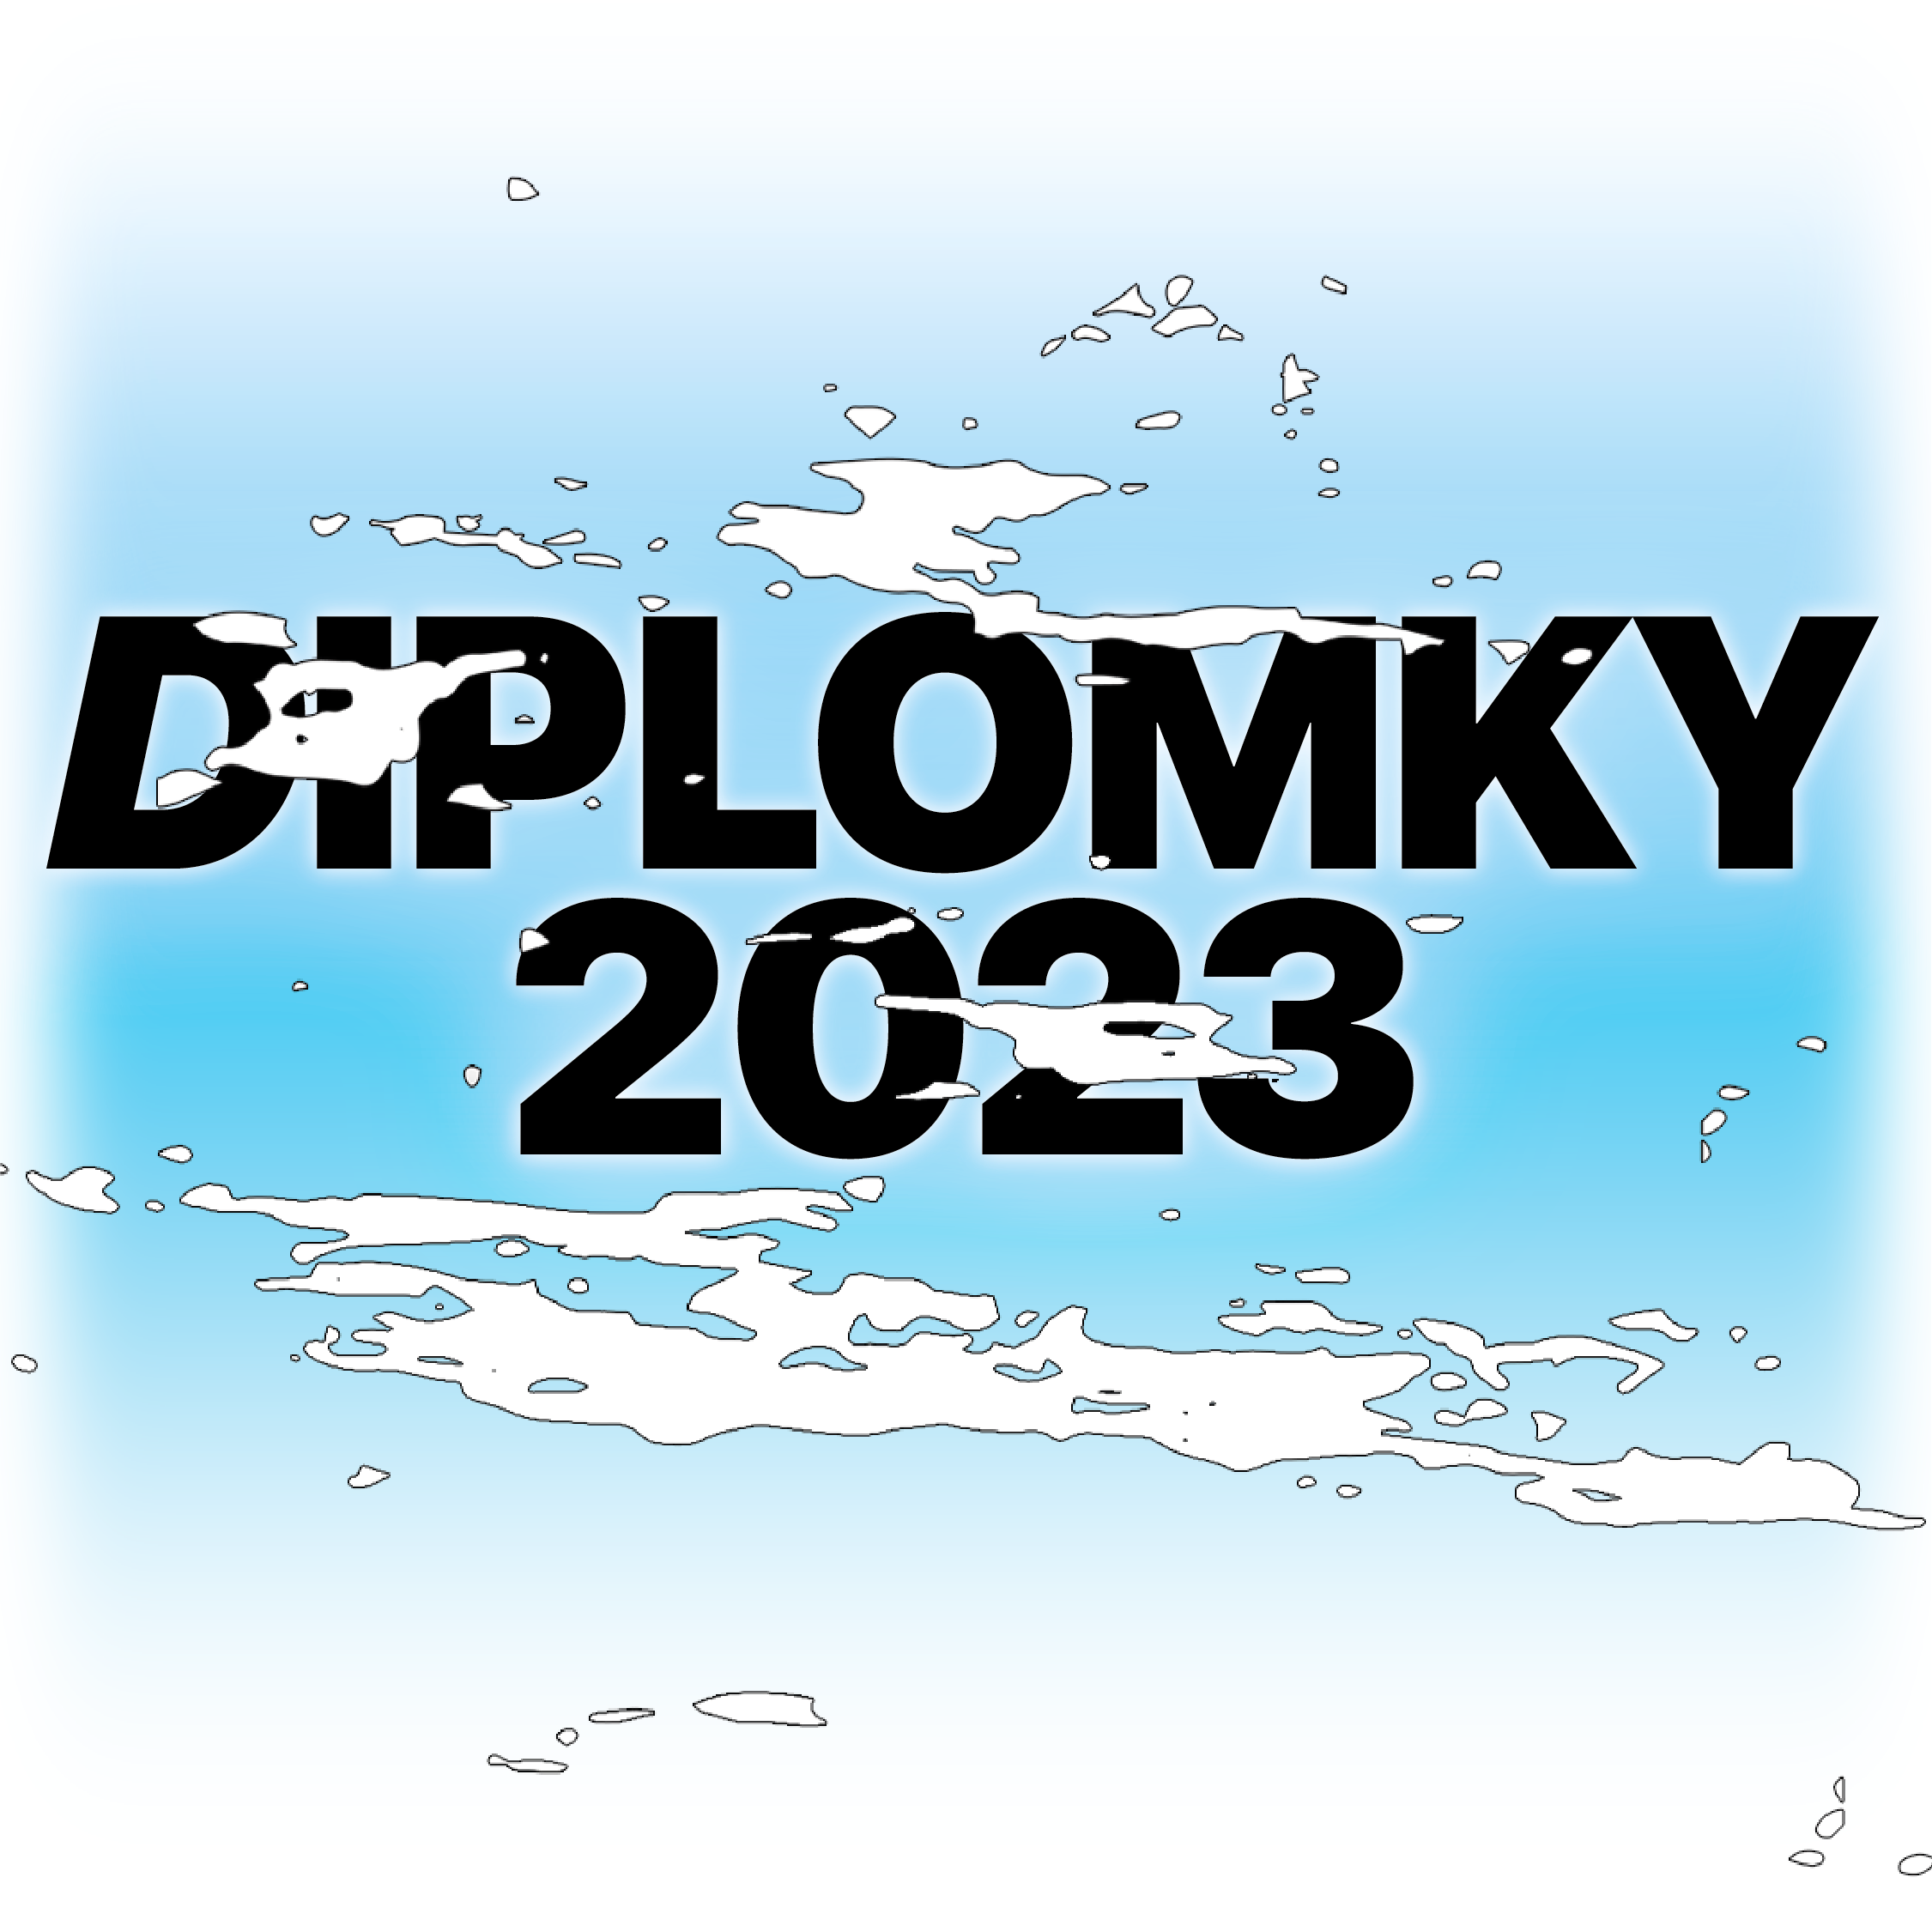 Diplomky 2023